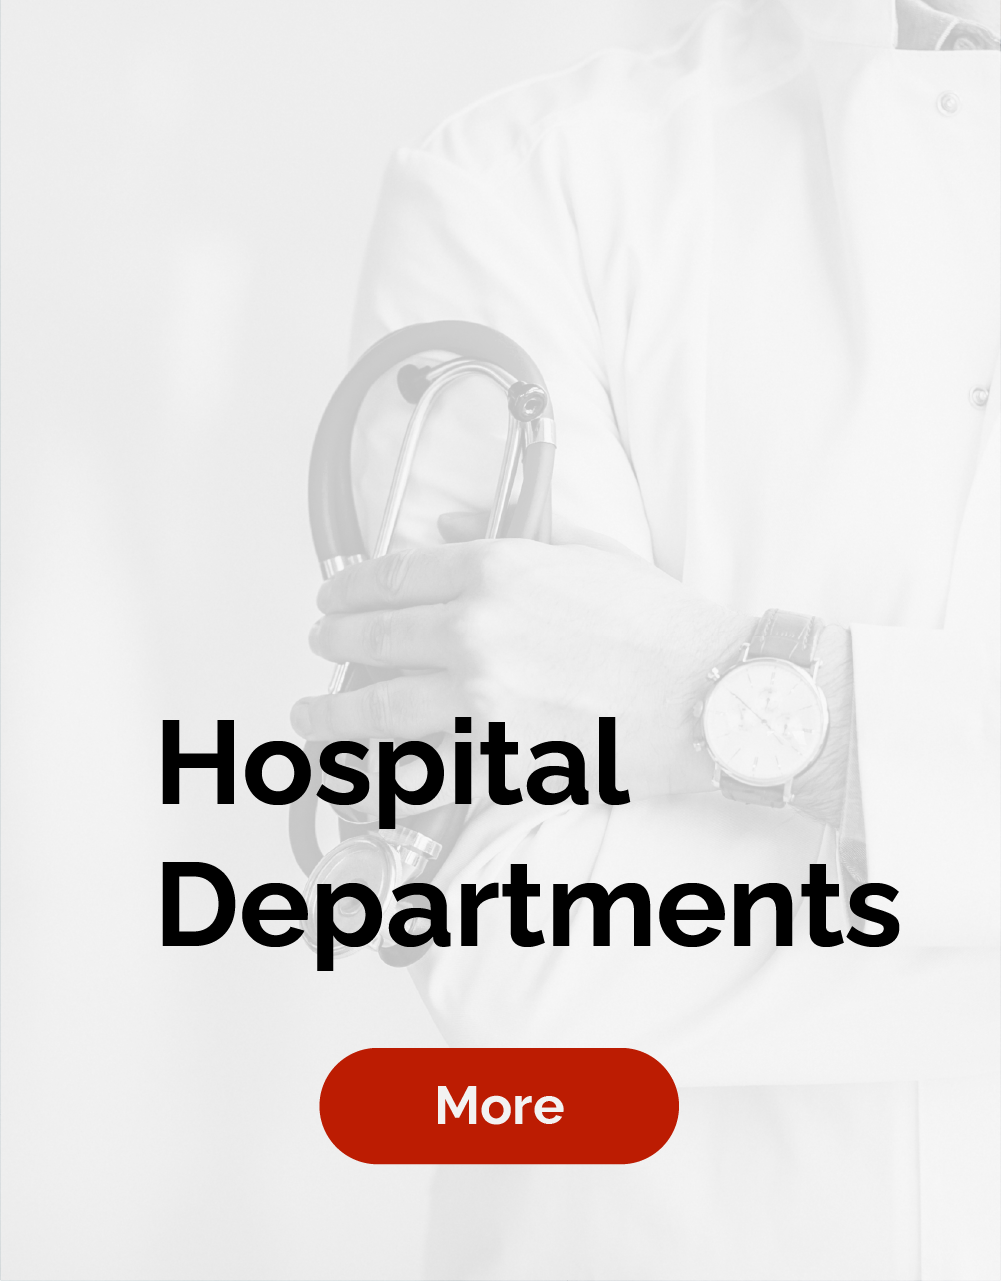 Hospital Departements